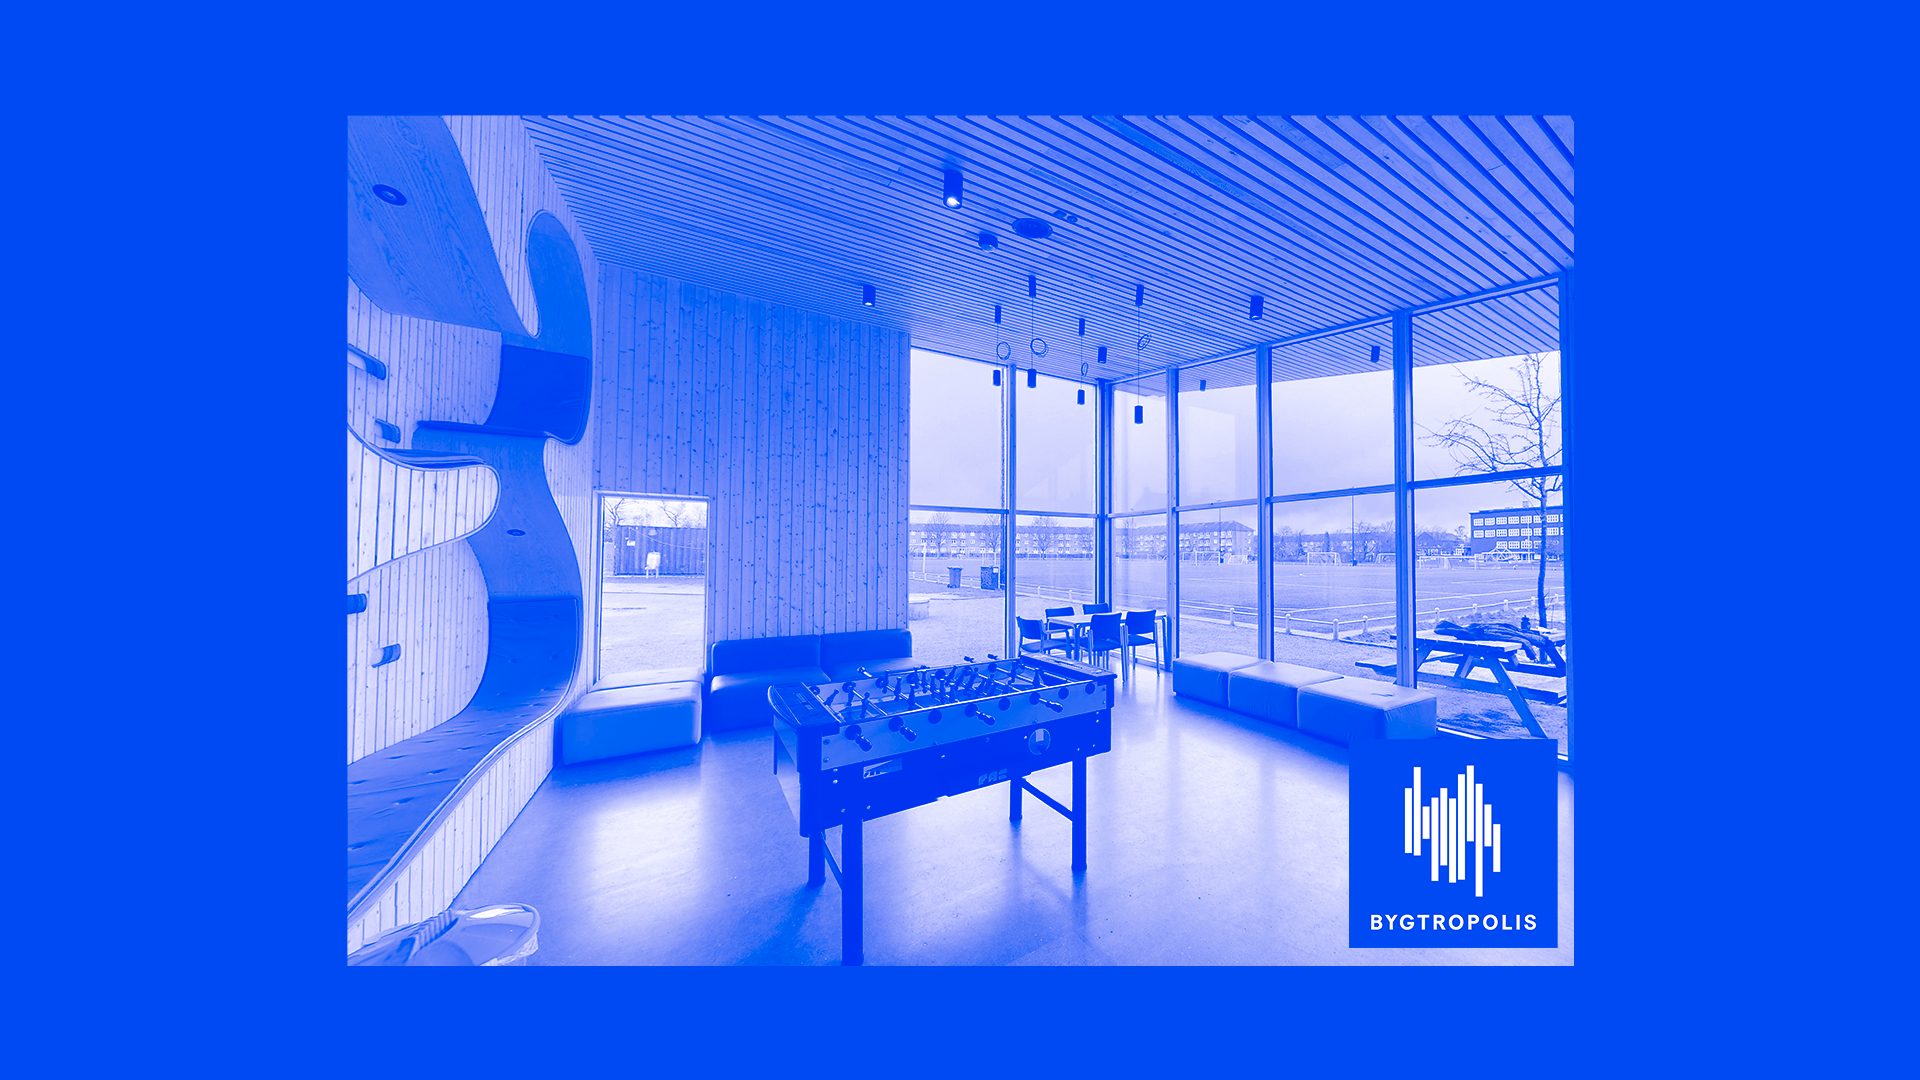 Et lyst lokale med store vinduer og et bordfodboldspil i midten. Billedet er tonet blåt.